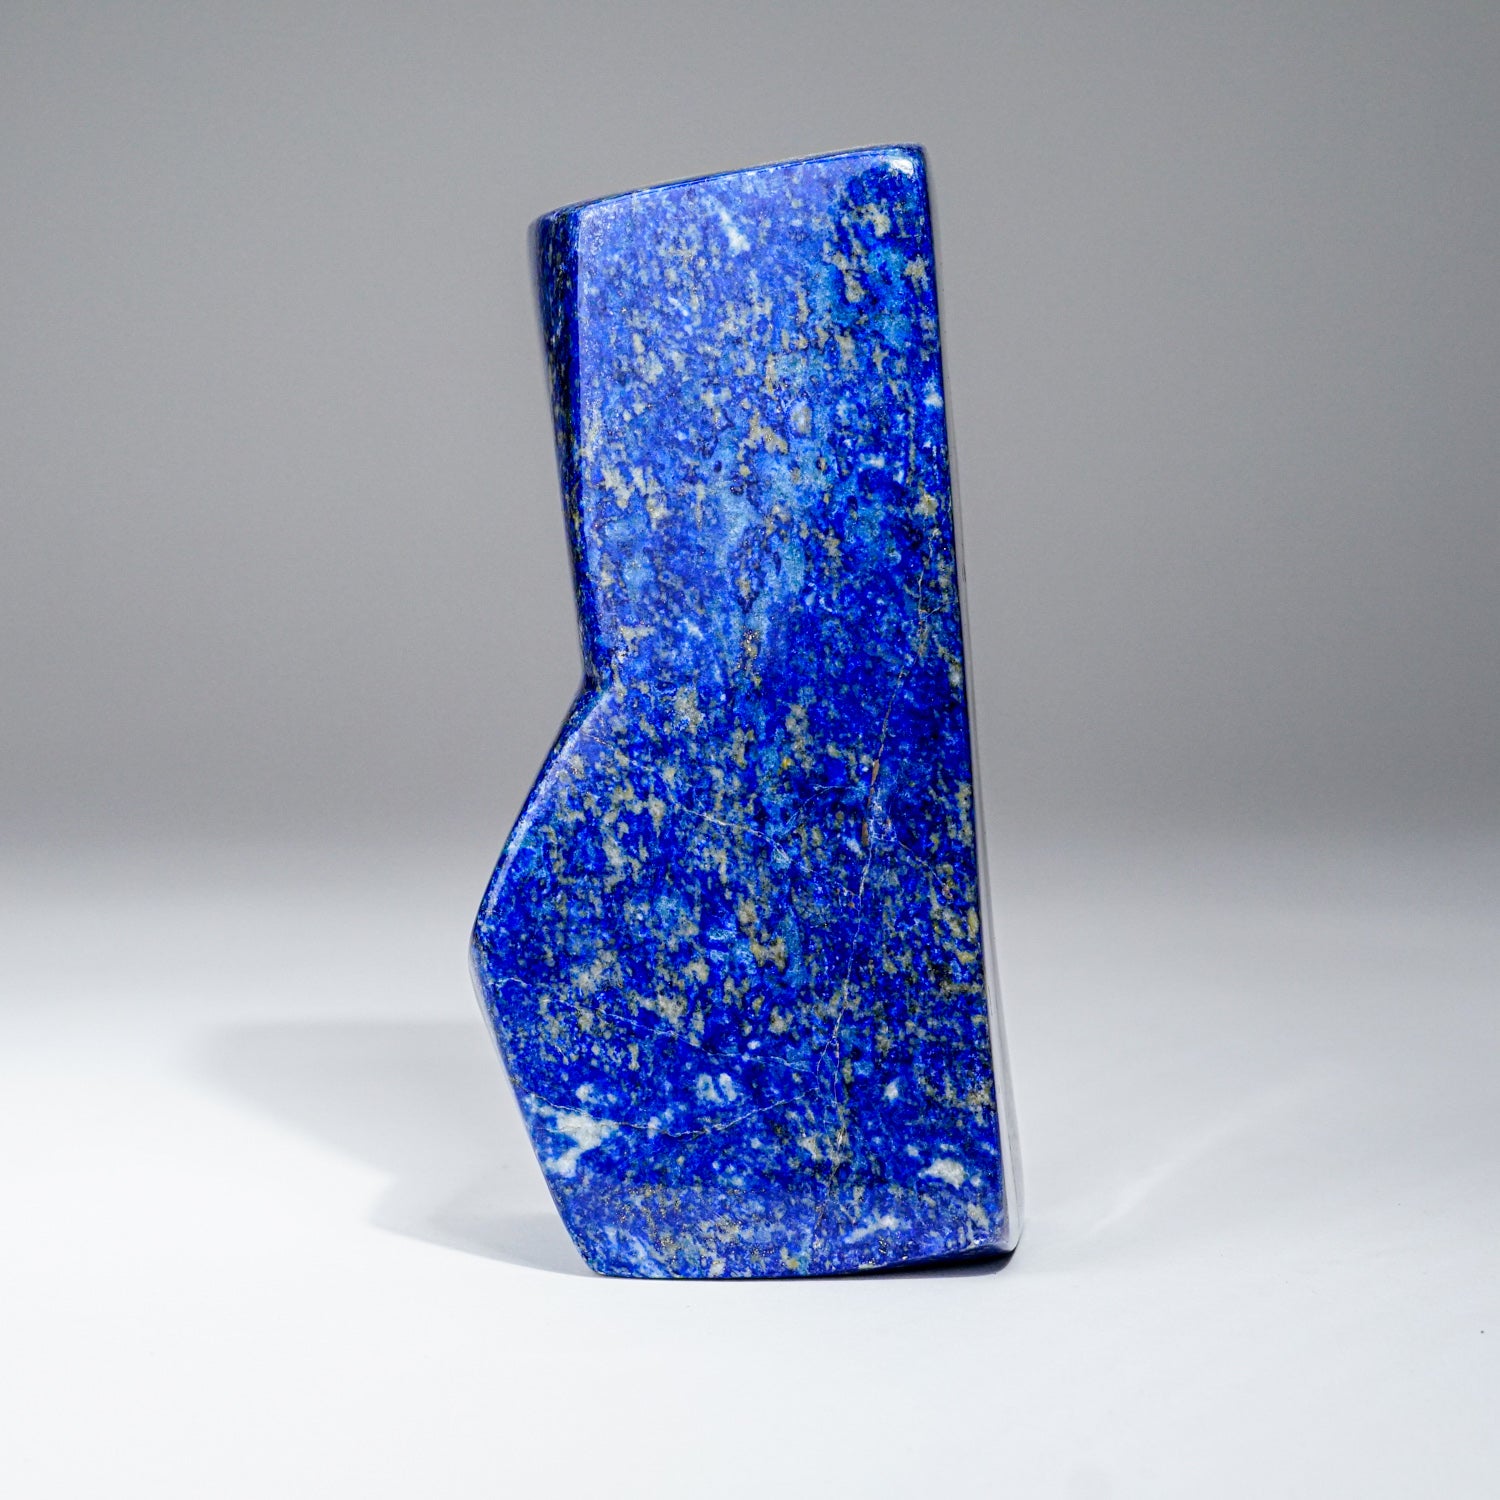 Polished Lapis Lazuli Freeform from Afghanistan (3.2 lbs)